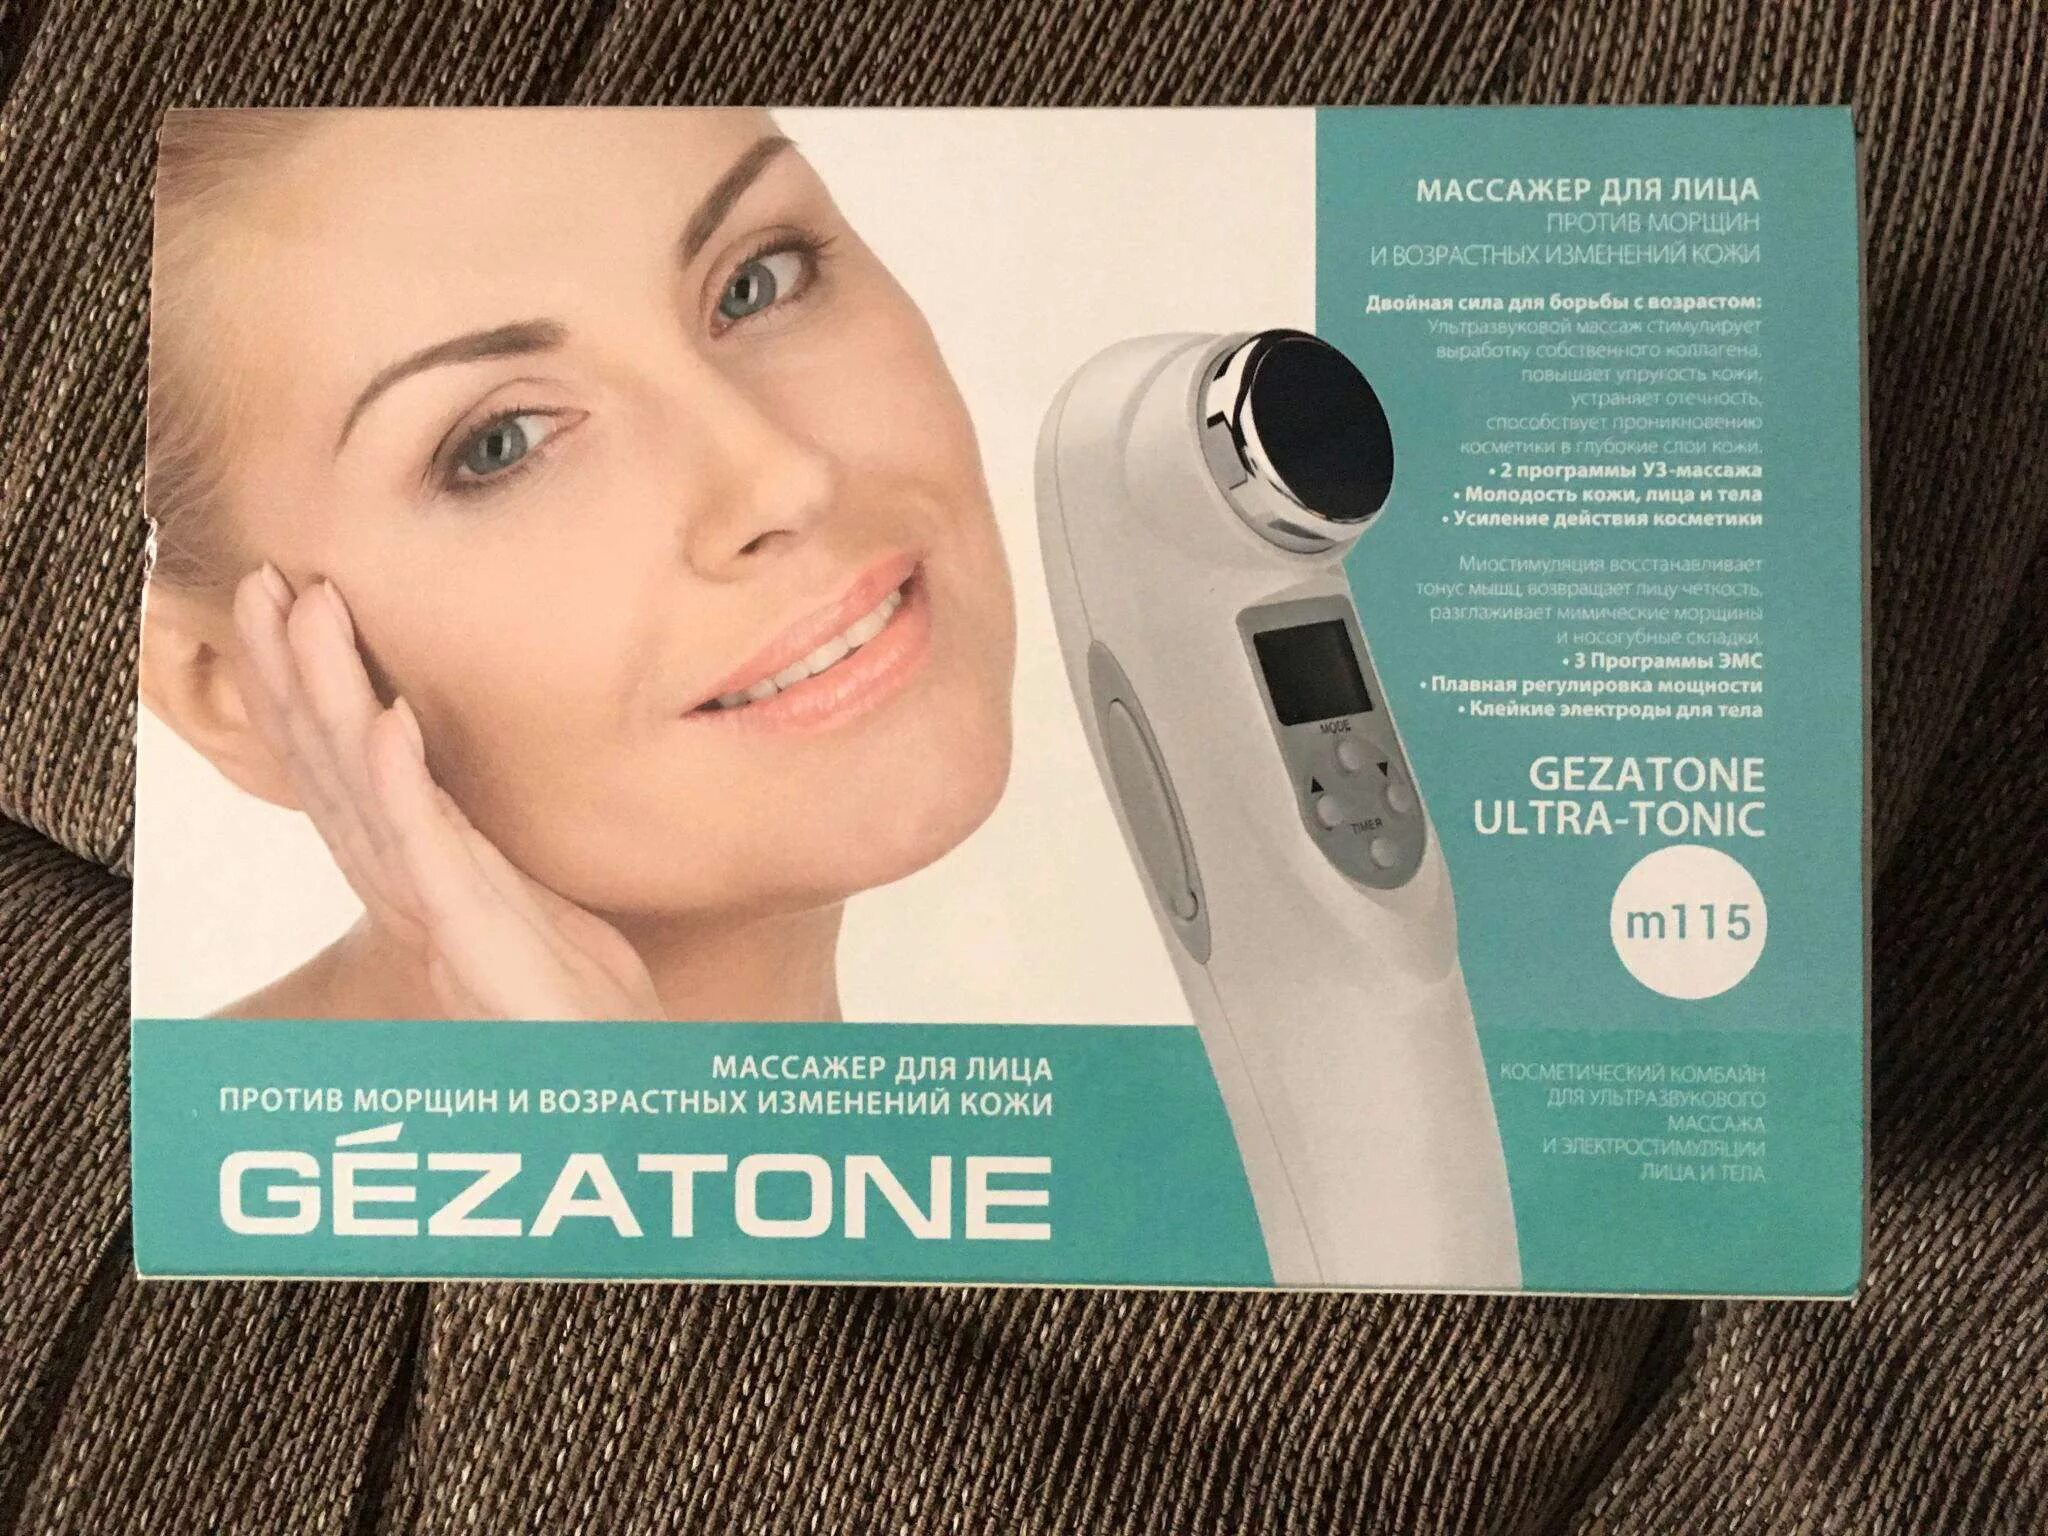 Gezatone Ultra-Tonic m115. Аппарат миостимуляция лица Gezatone m701. Жезатон массажер для лица и тела. Массажер для лица шеи и тела ультразвук миостимуляция m115 Gezatone.